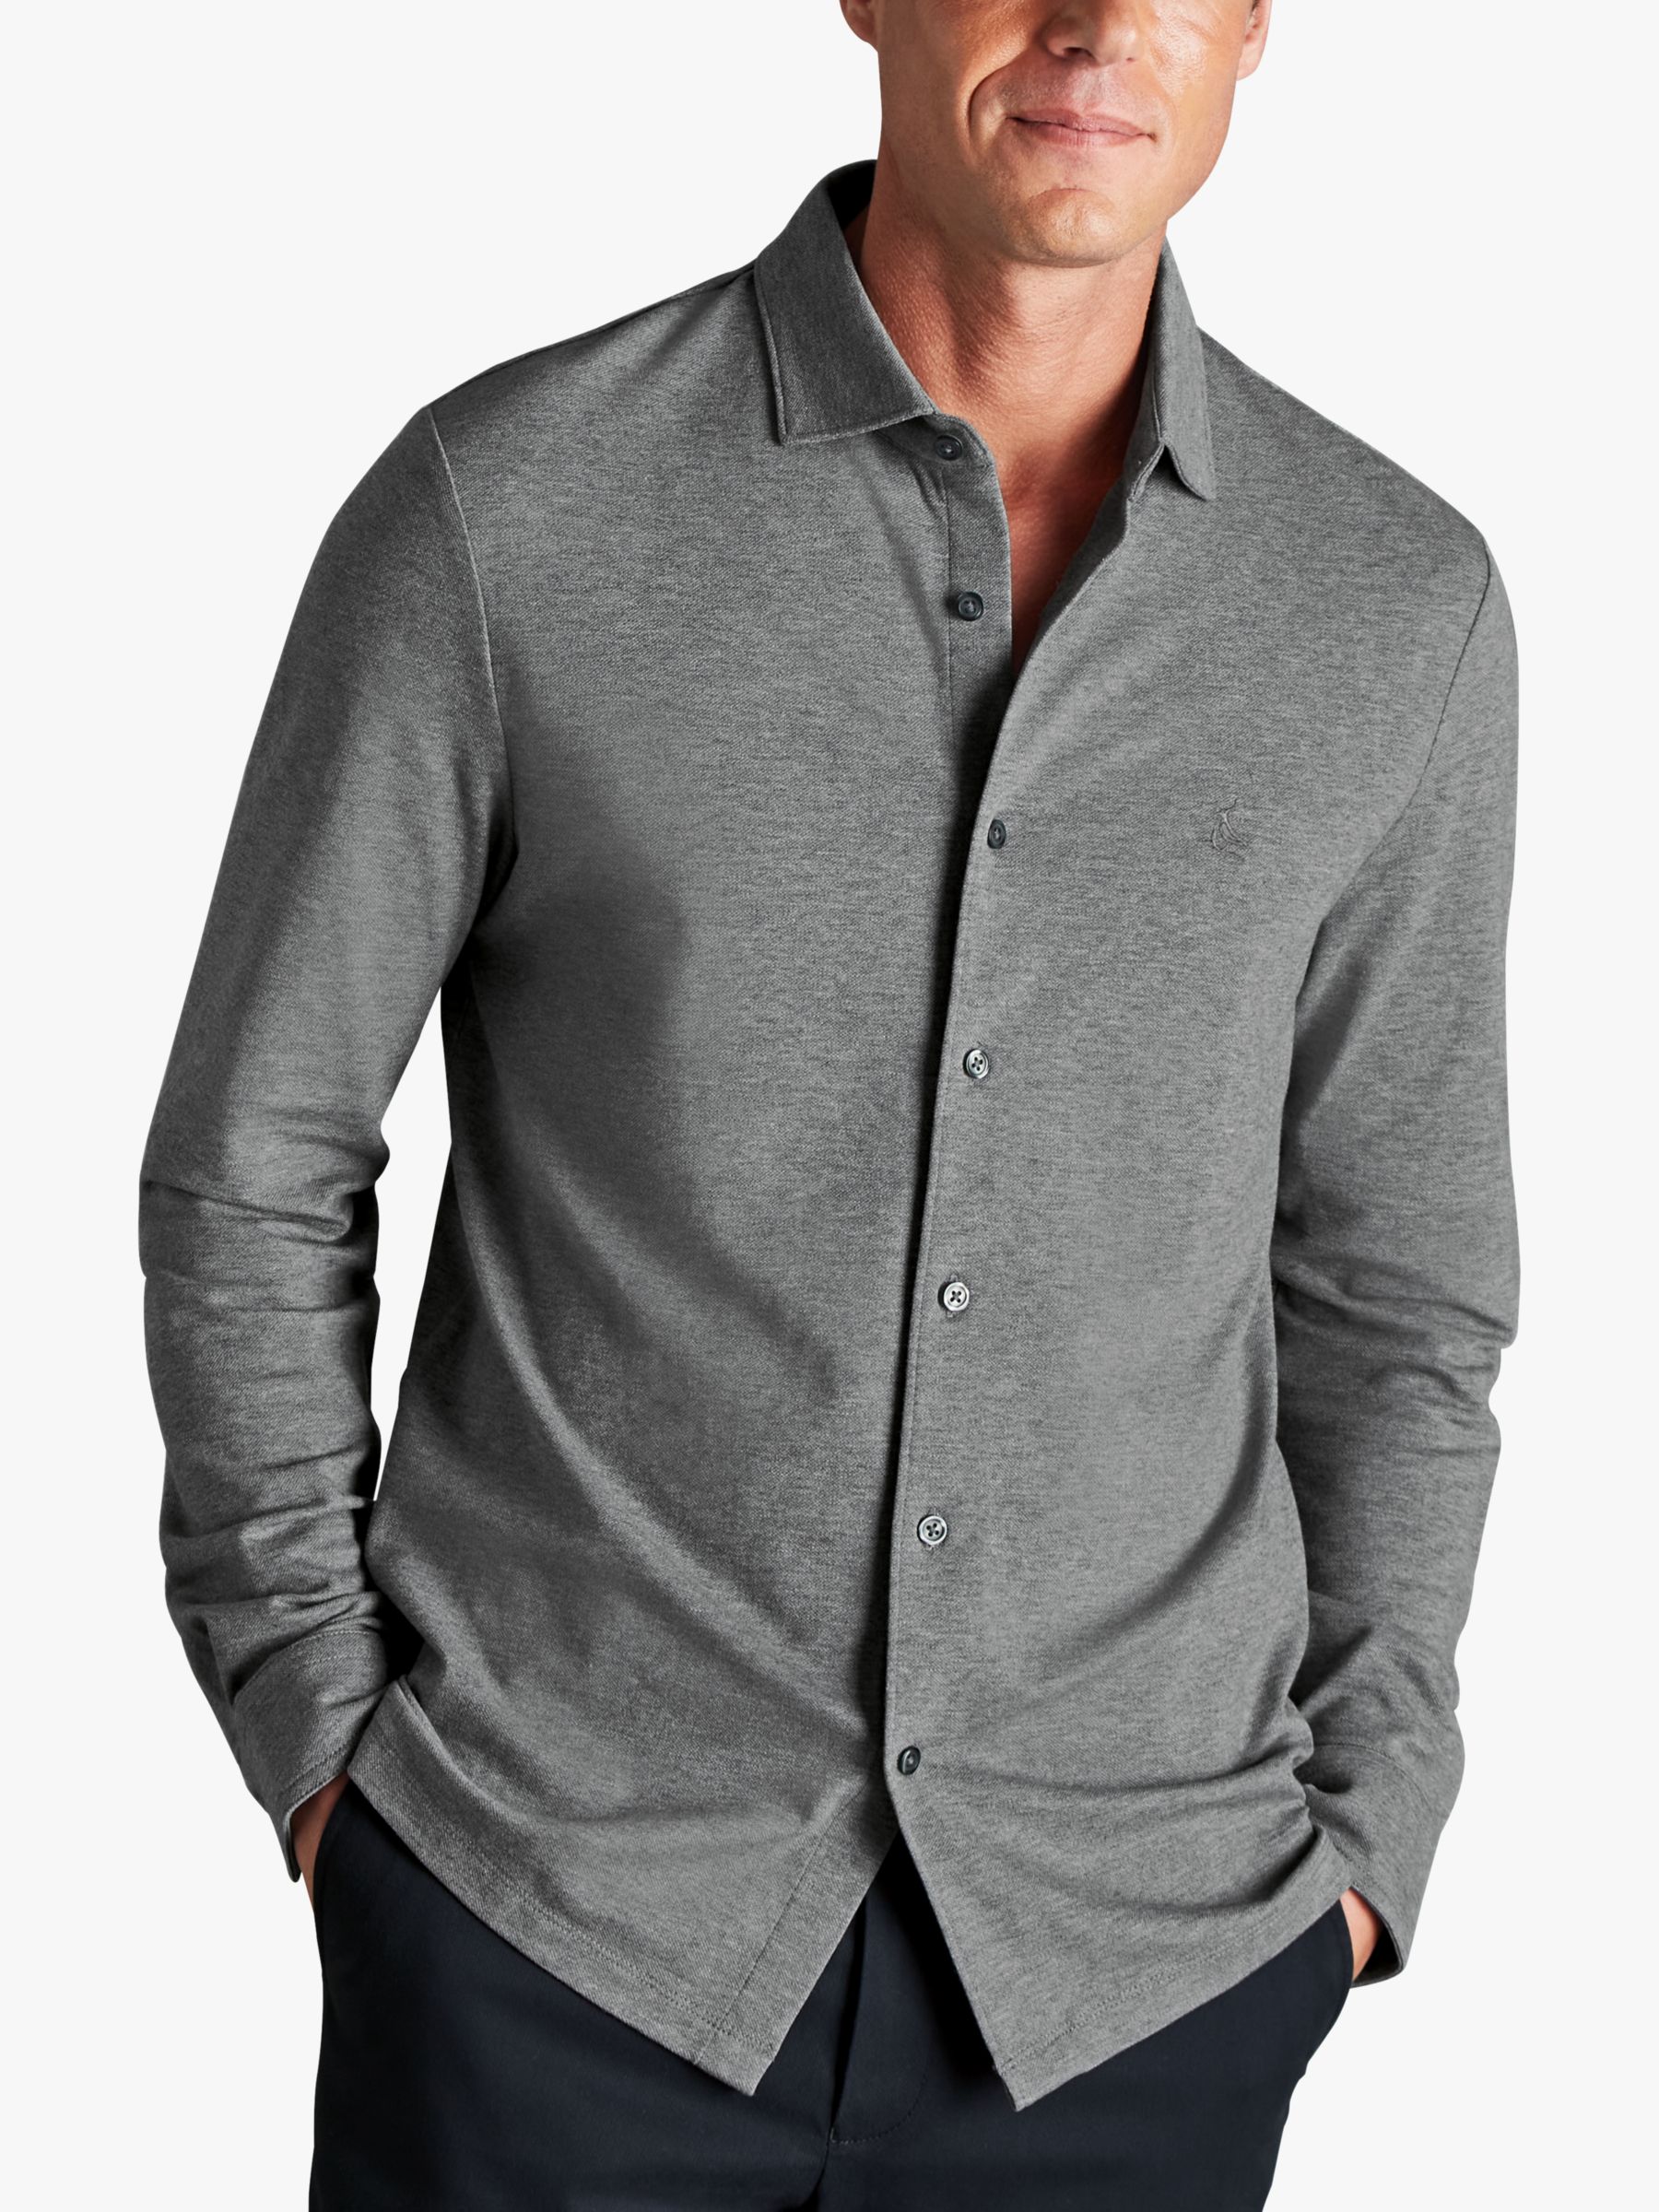 Charles Tyrwhitt Pique Jersey Shirt, Grey Marl at John Lewis & Partners